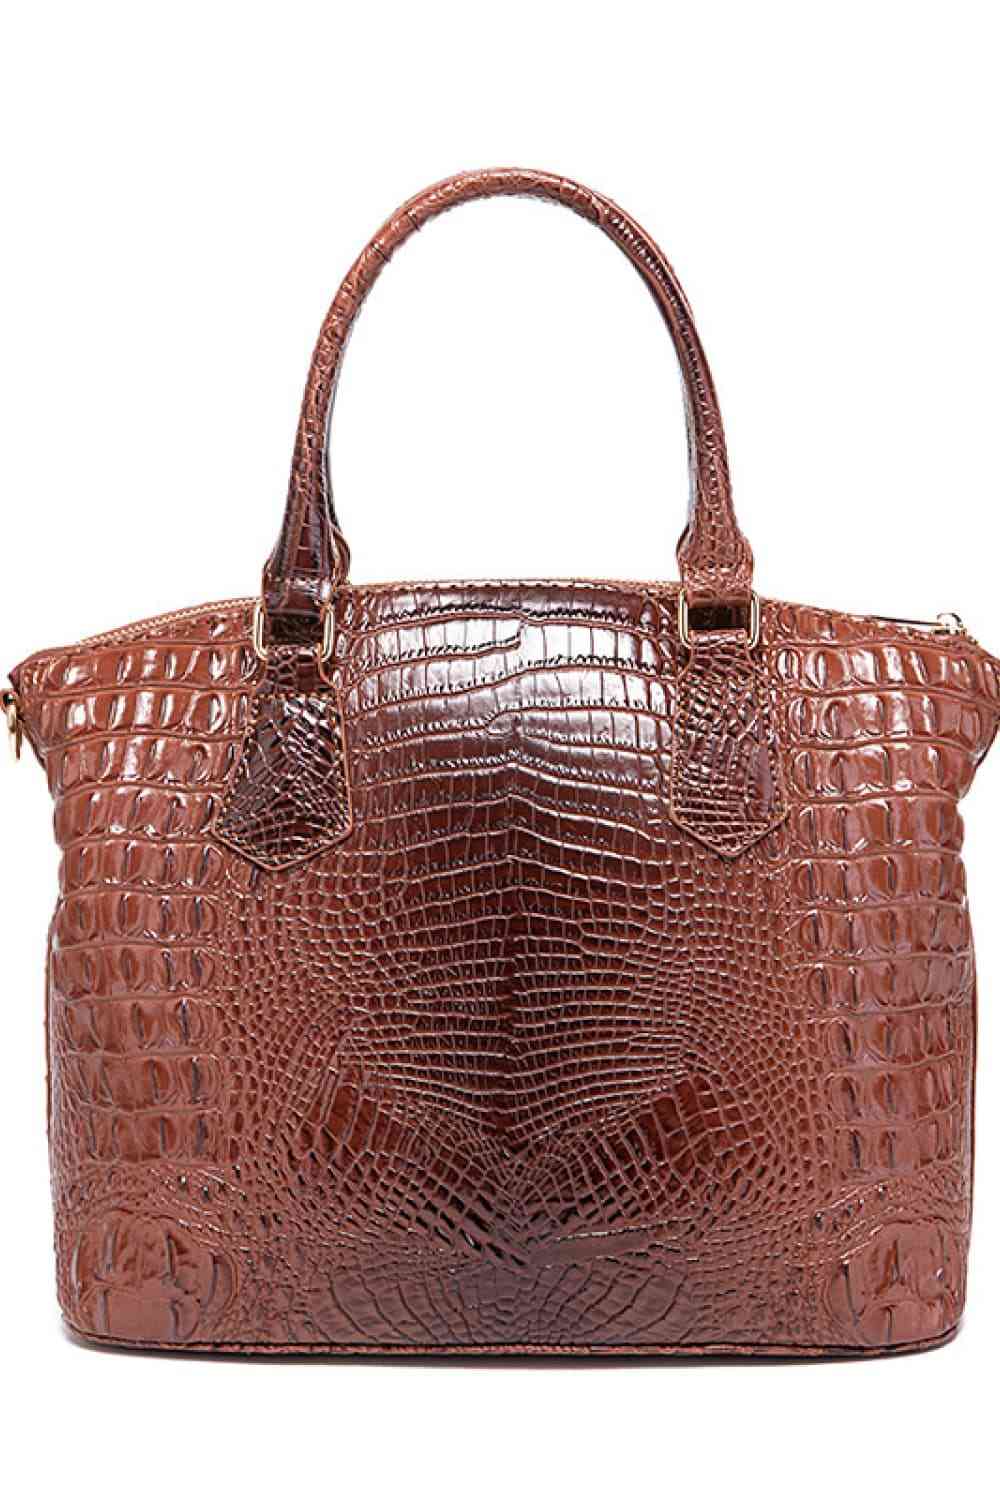 Ava Mea PU Croc Leather Handbag